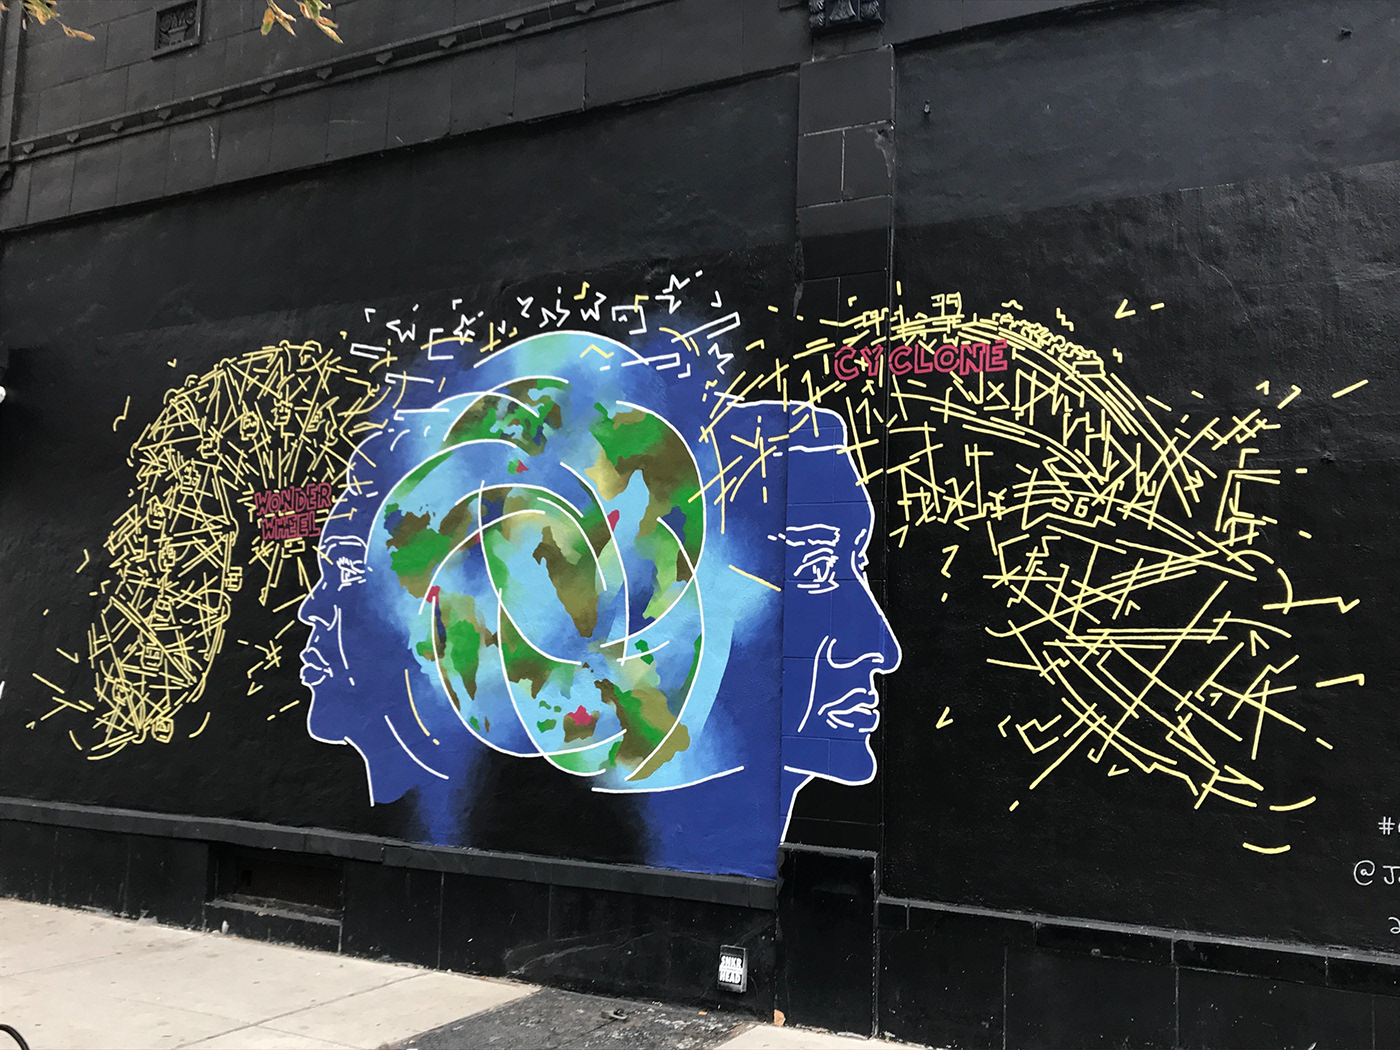 Brooklyn coney island cyclone keep spinning mural art public art Street Art  wonder wheel